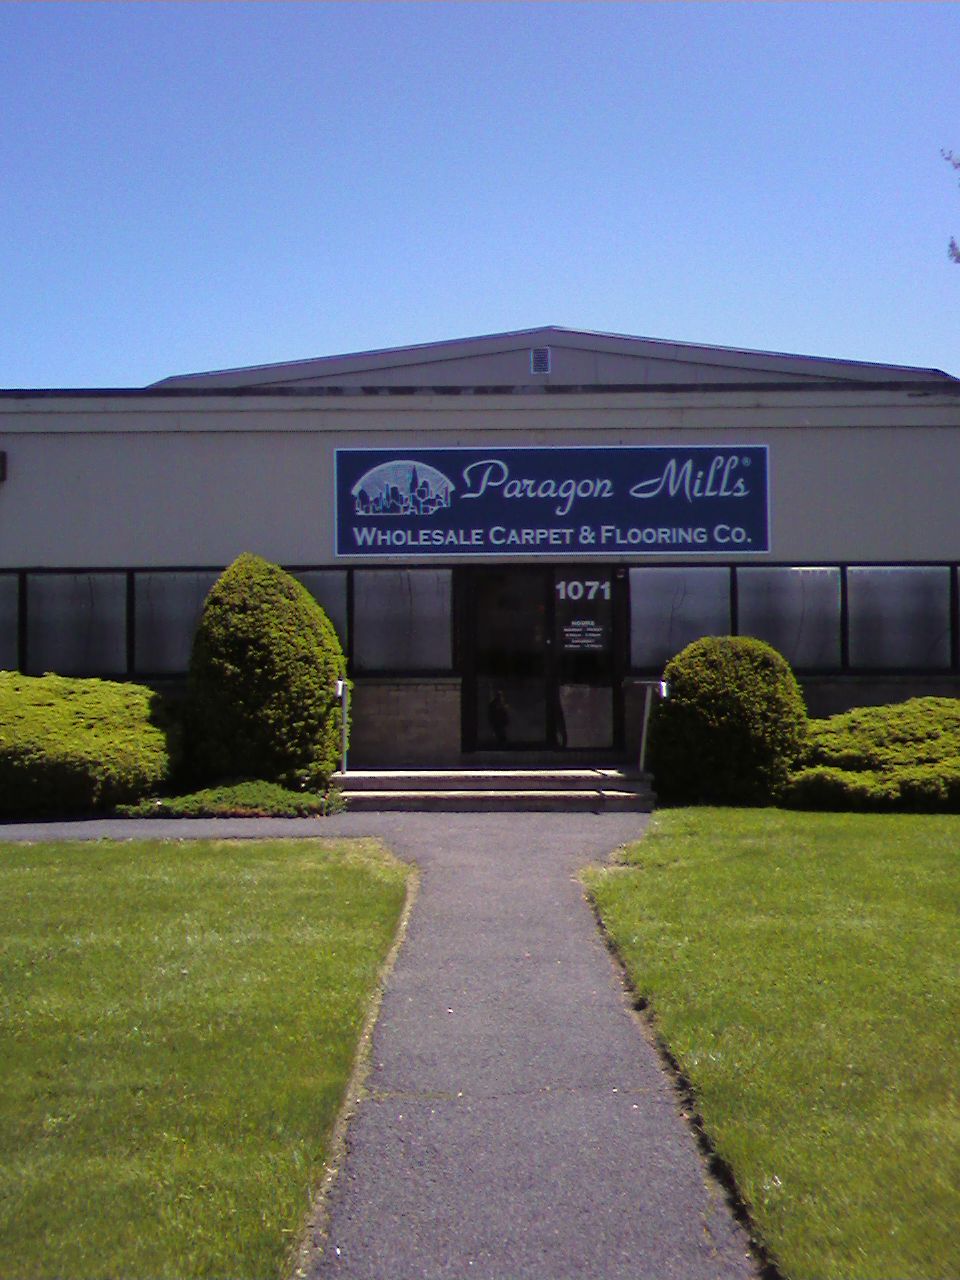 Paragon Mills Wholesale Carpet & Flooring Co.